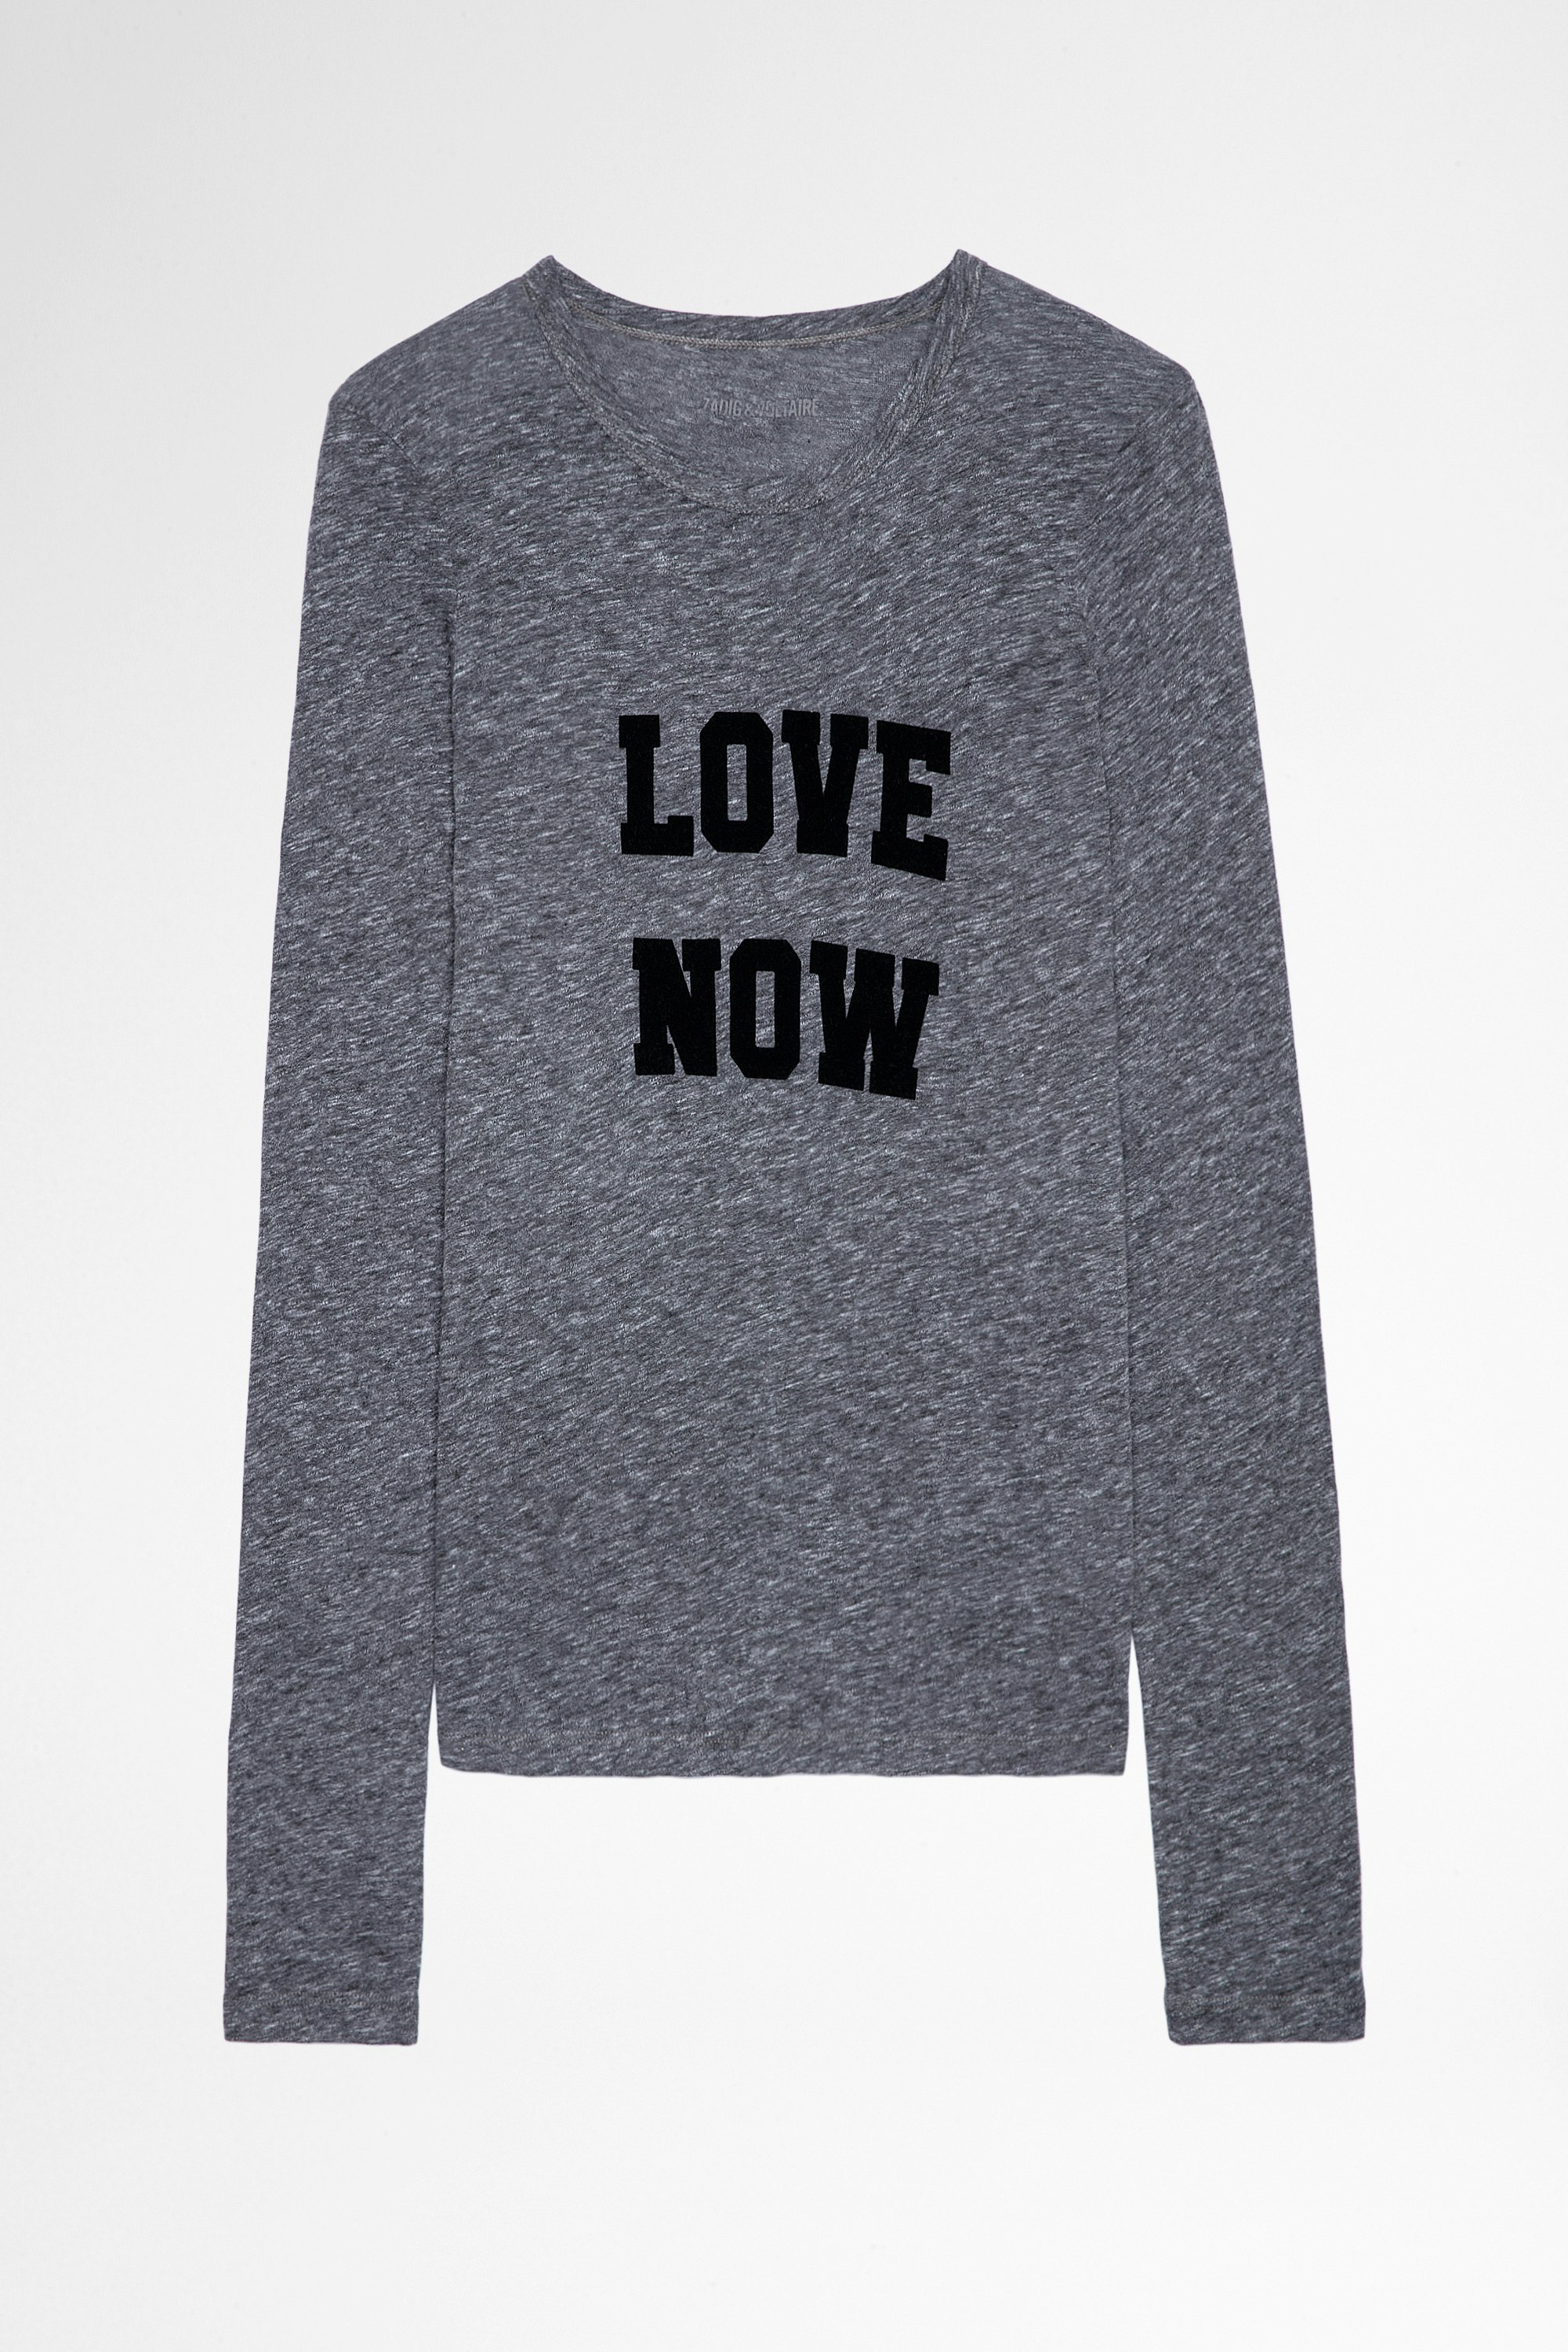 T-Shirt Willy Graues Damen-T-shirt Love Now mit langen Ärmeln